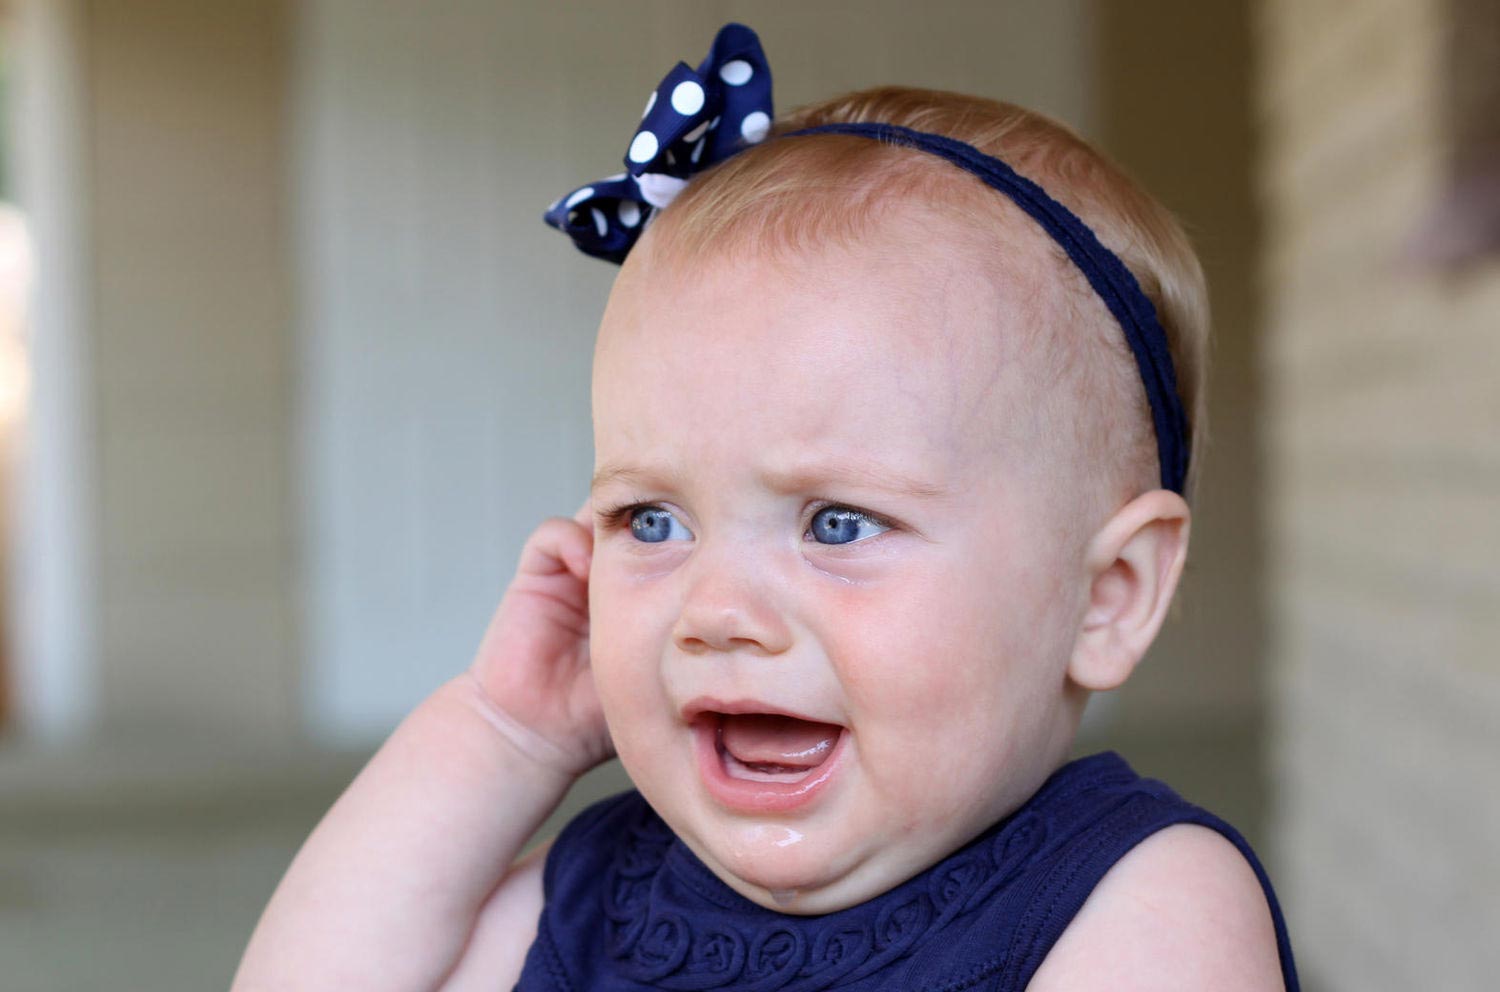 عفونت گوش نوزاد هفت ماهه
